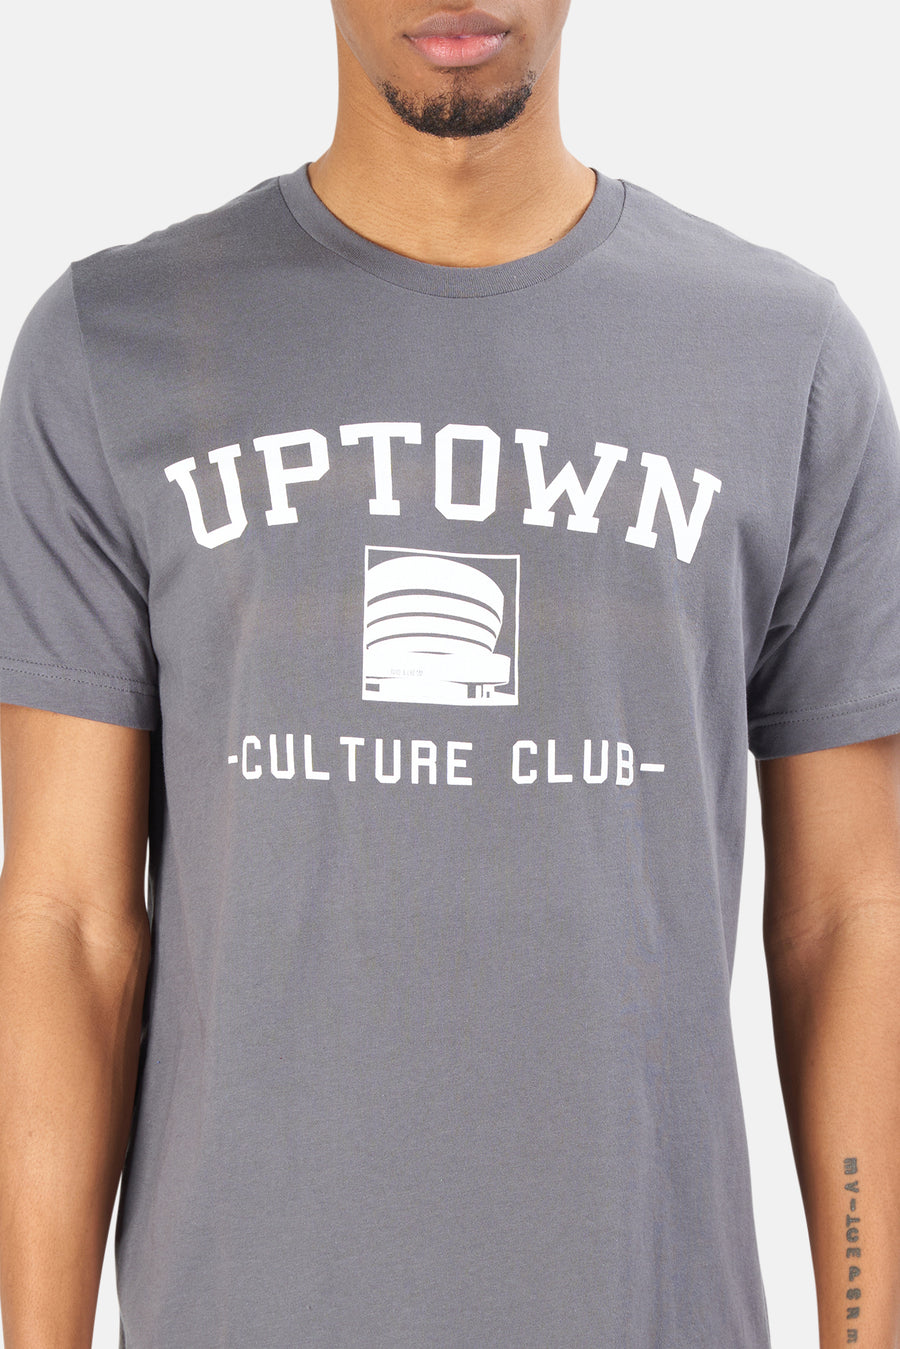 Uptown Culture Club Tee Grey - blueandcream